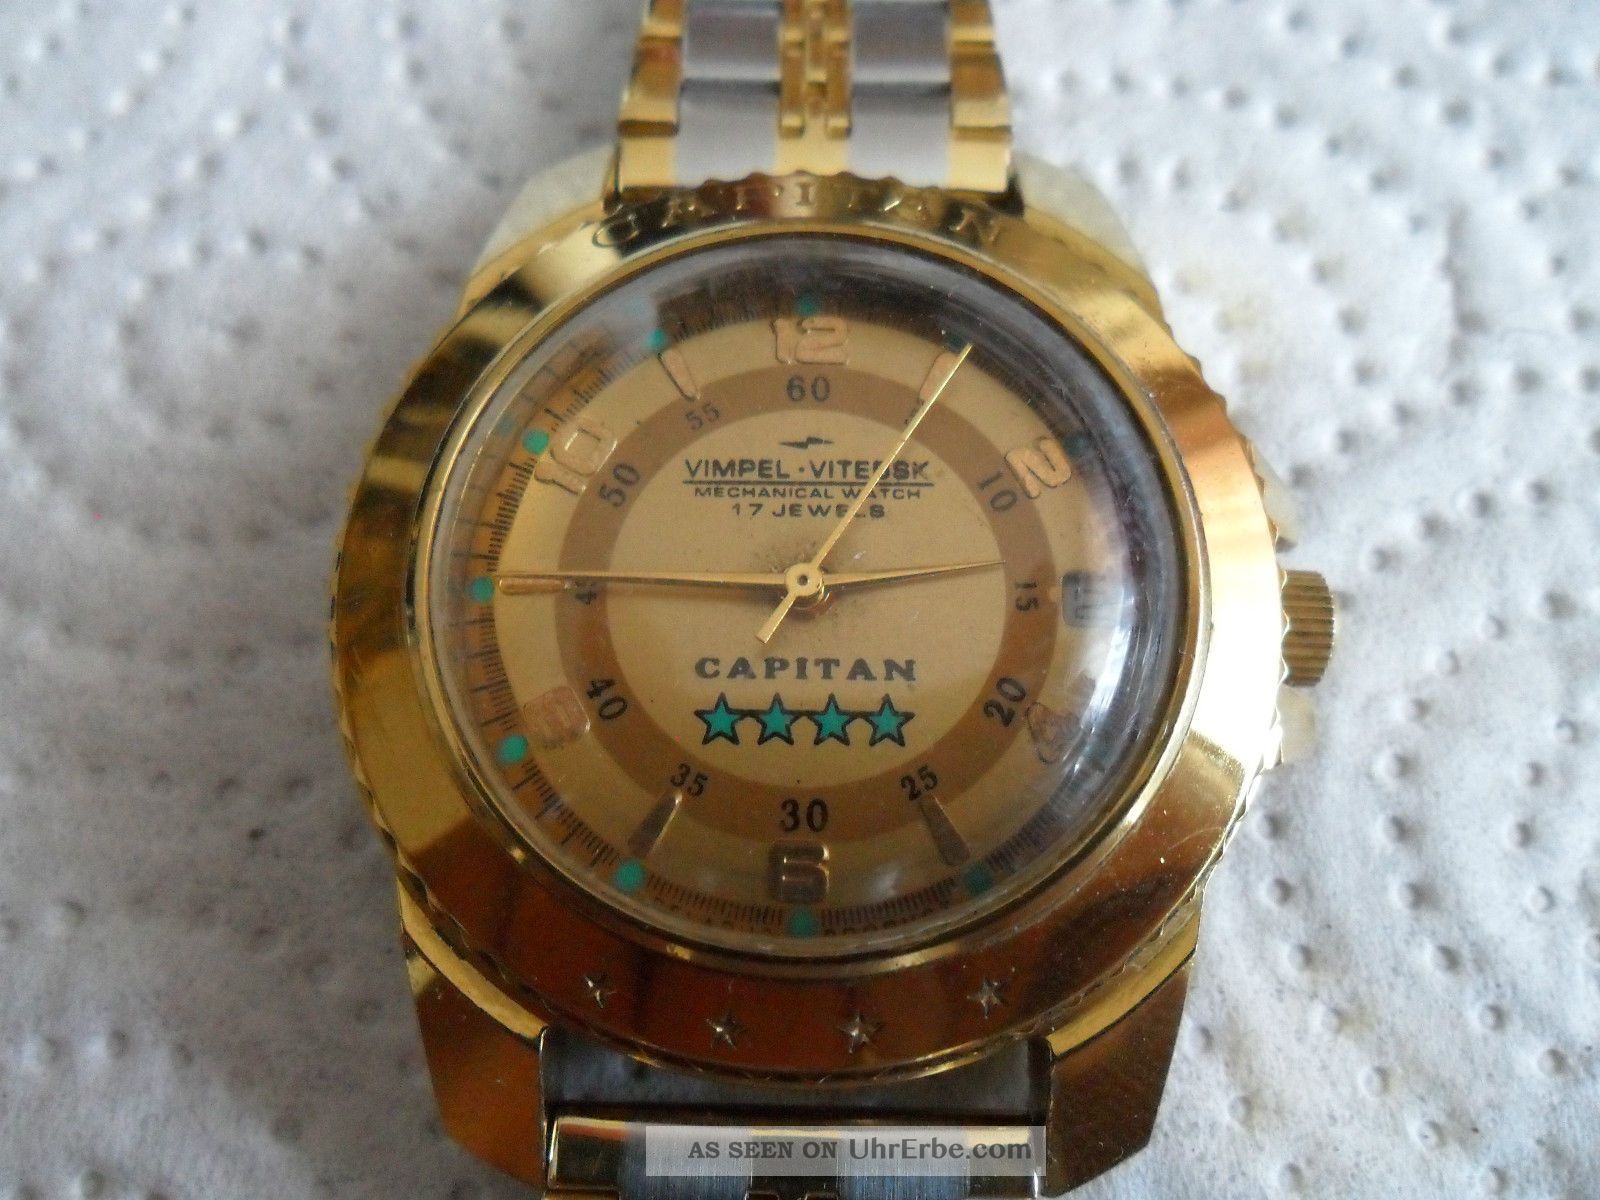 Luxus Hochwertige Poljot Capitan Vimpel - Vitebsk 17jewels Vergoldet Armbanduhren Bild